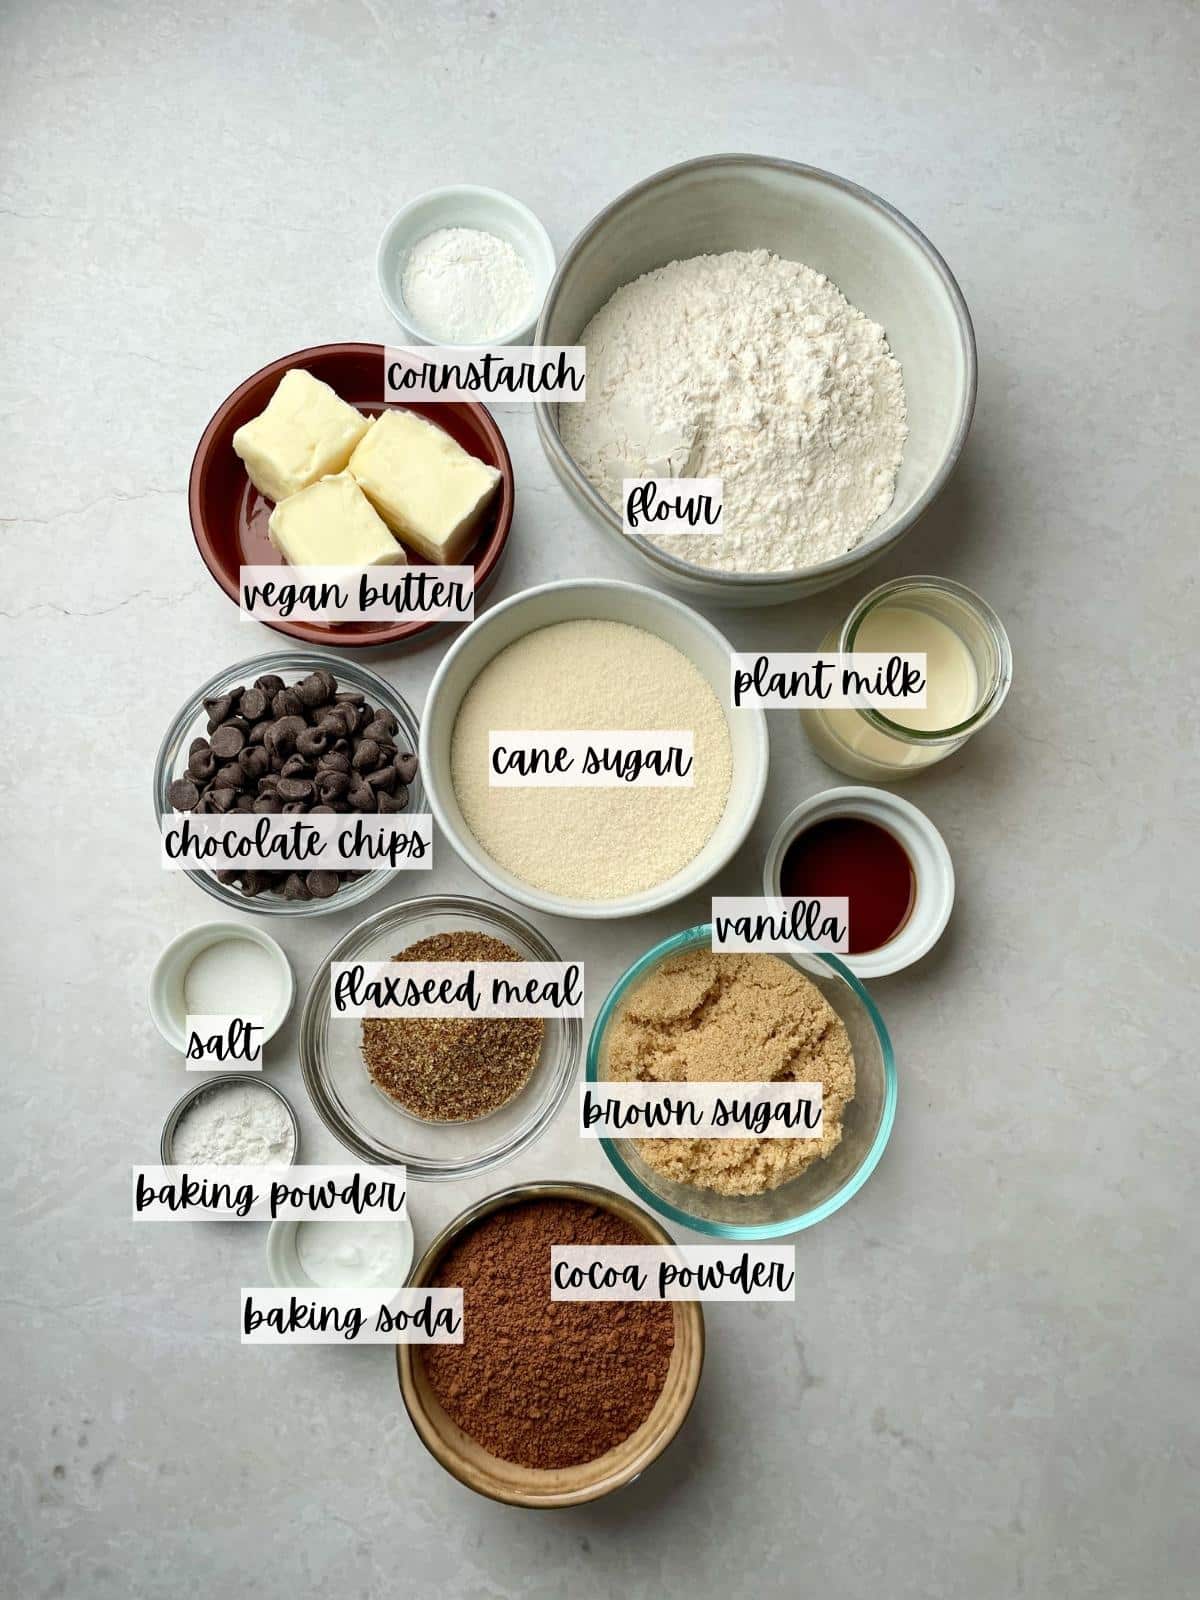 Labeled ingredients for brookies.